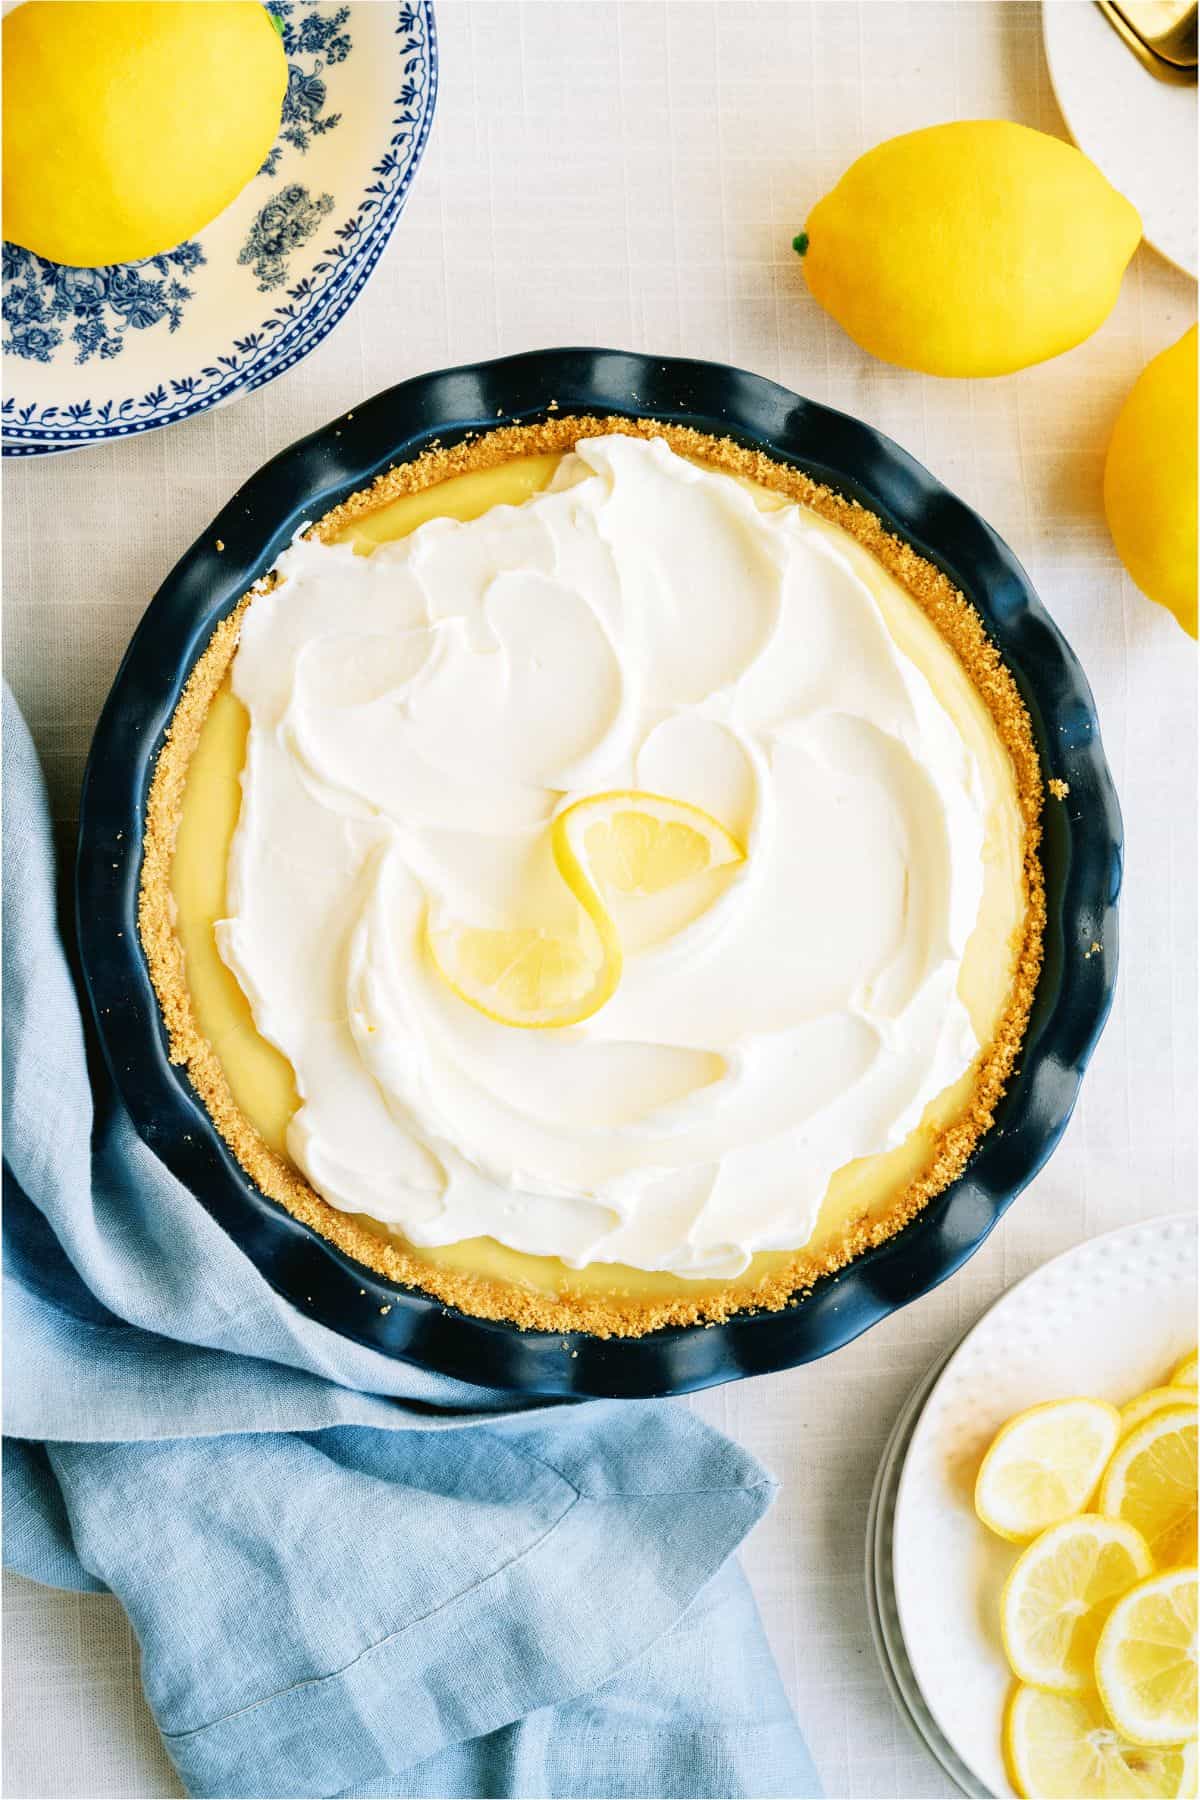 Creamy Lemon Pie with sliced lemon garnished